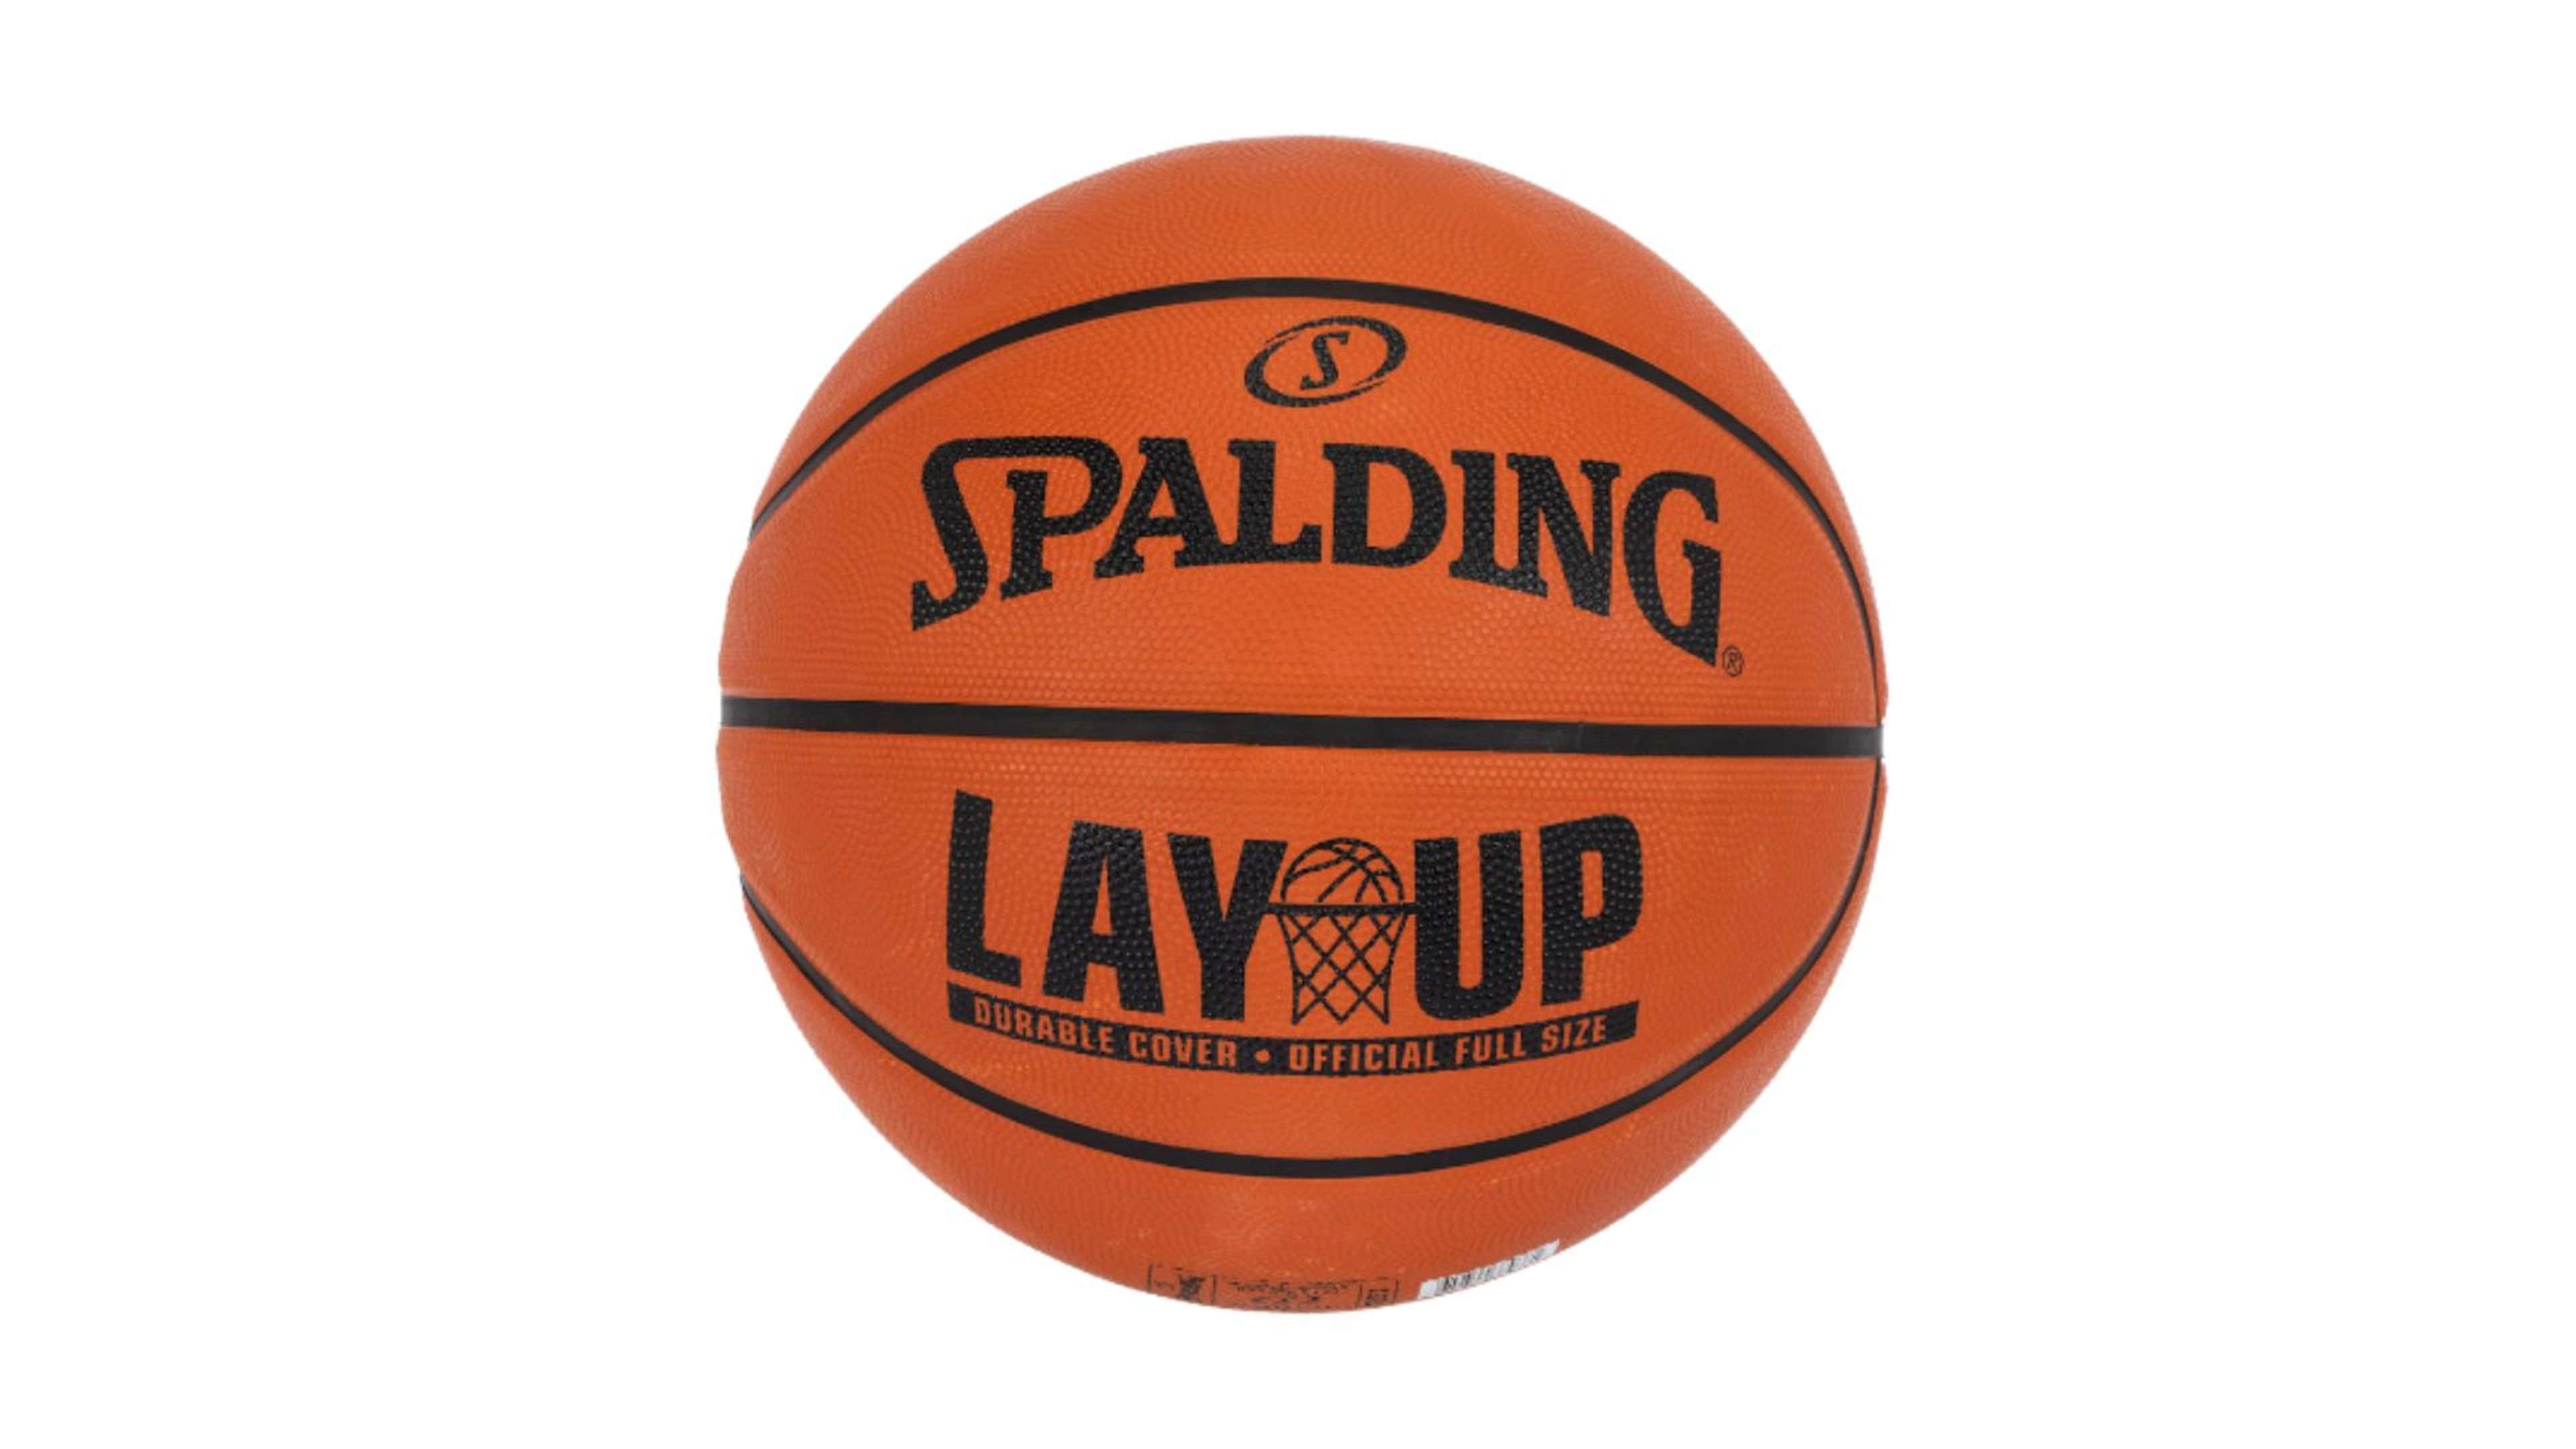 Bola de Basquete Spalding - Lay Up - Laranja e Preto